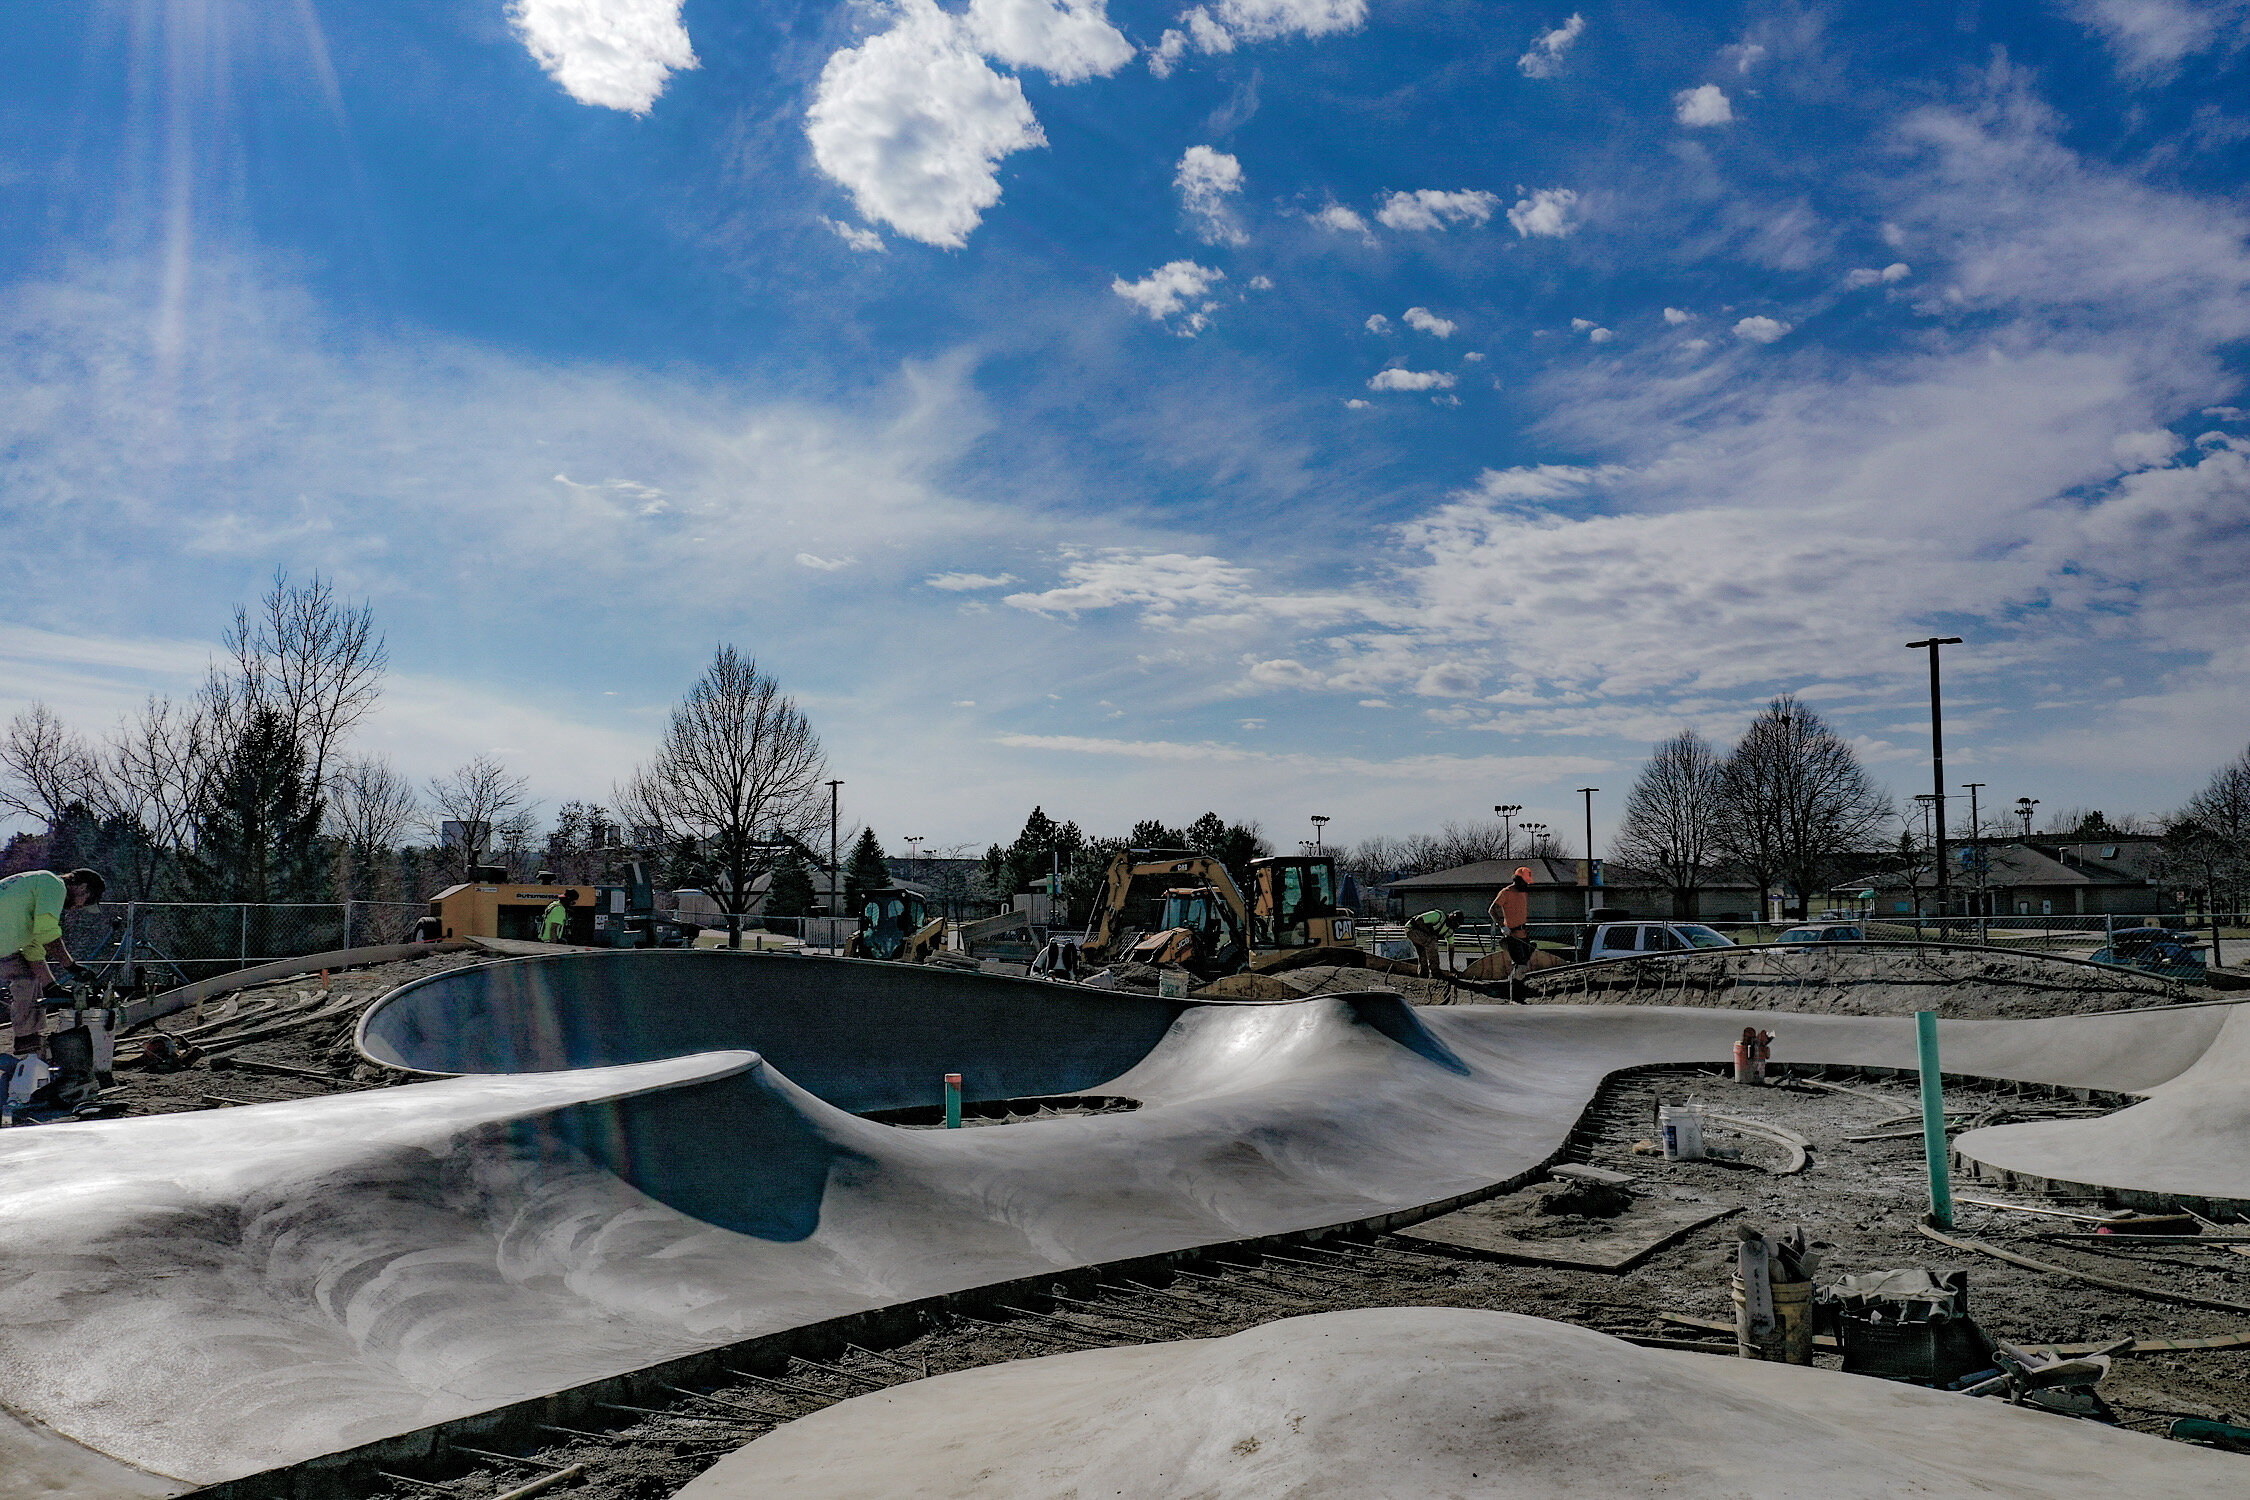 Chicago suburbs getting hooked up 👍🏼 New Vernon Hills skatepark